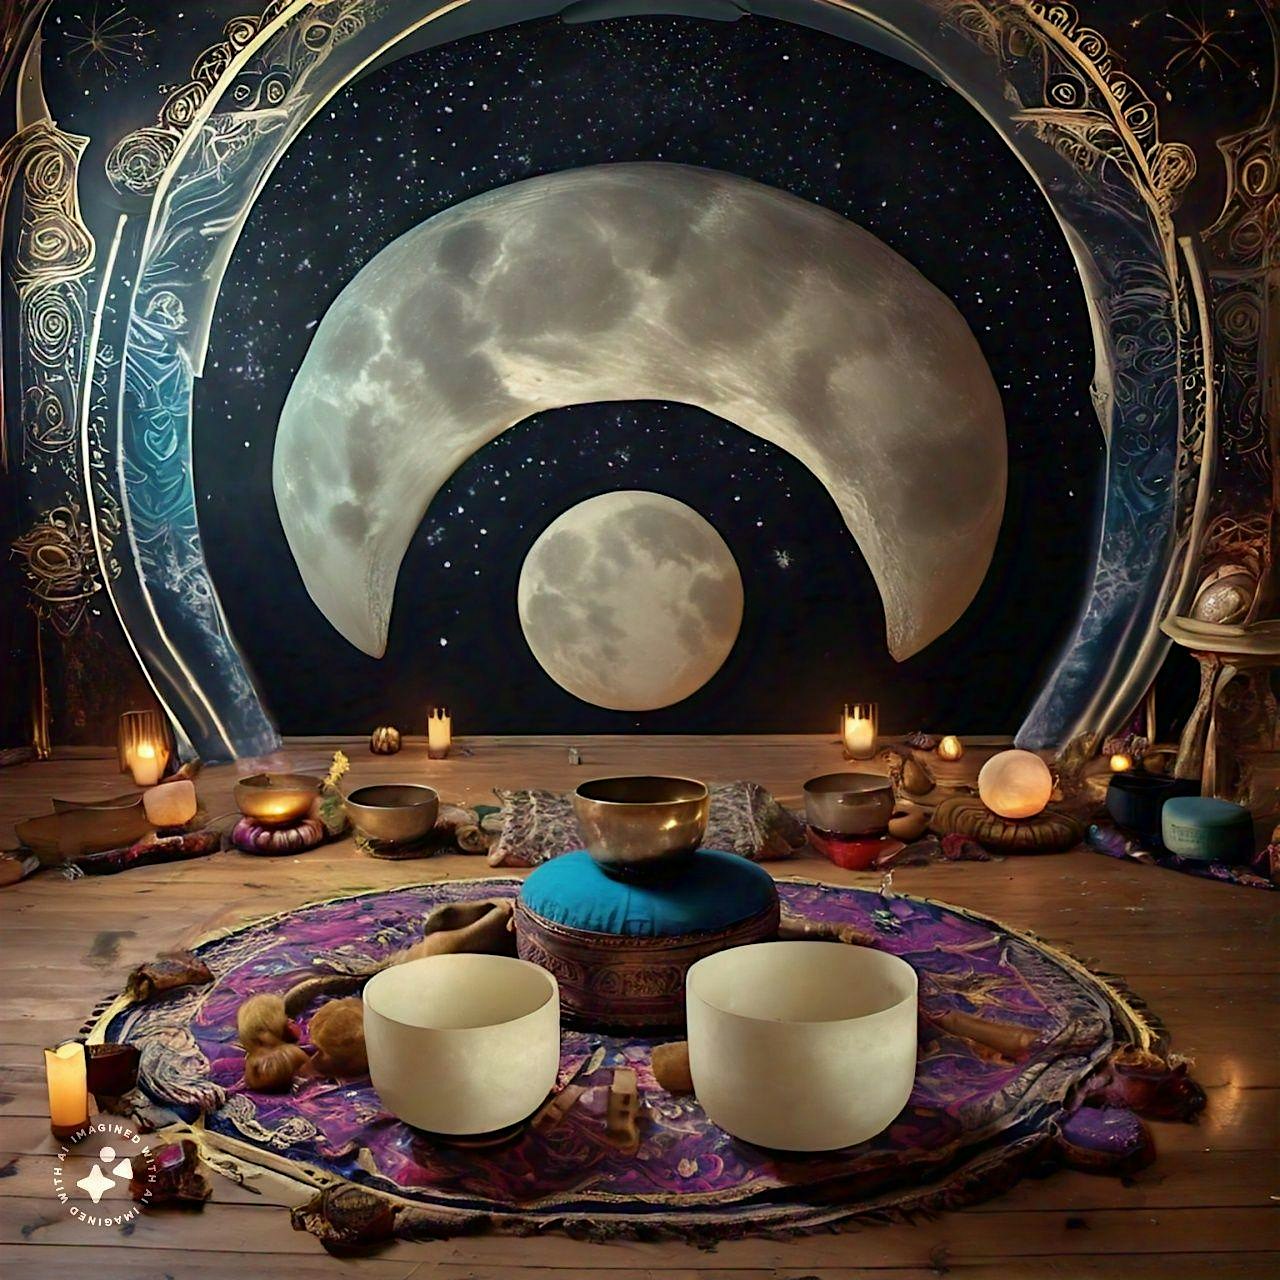 Full Moon Sound Bath Ceremony